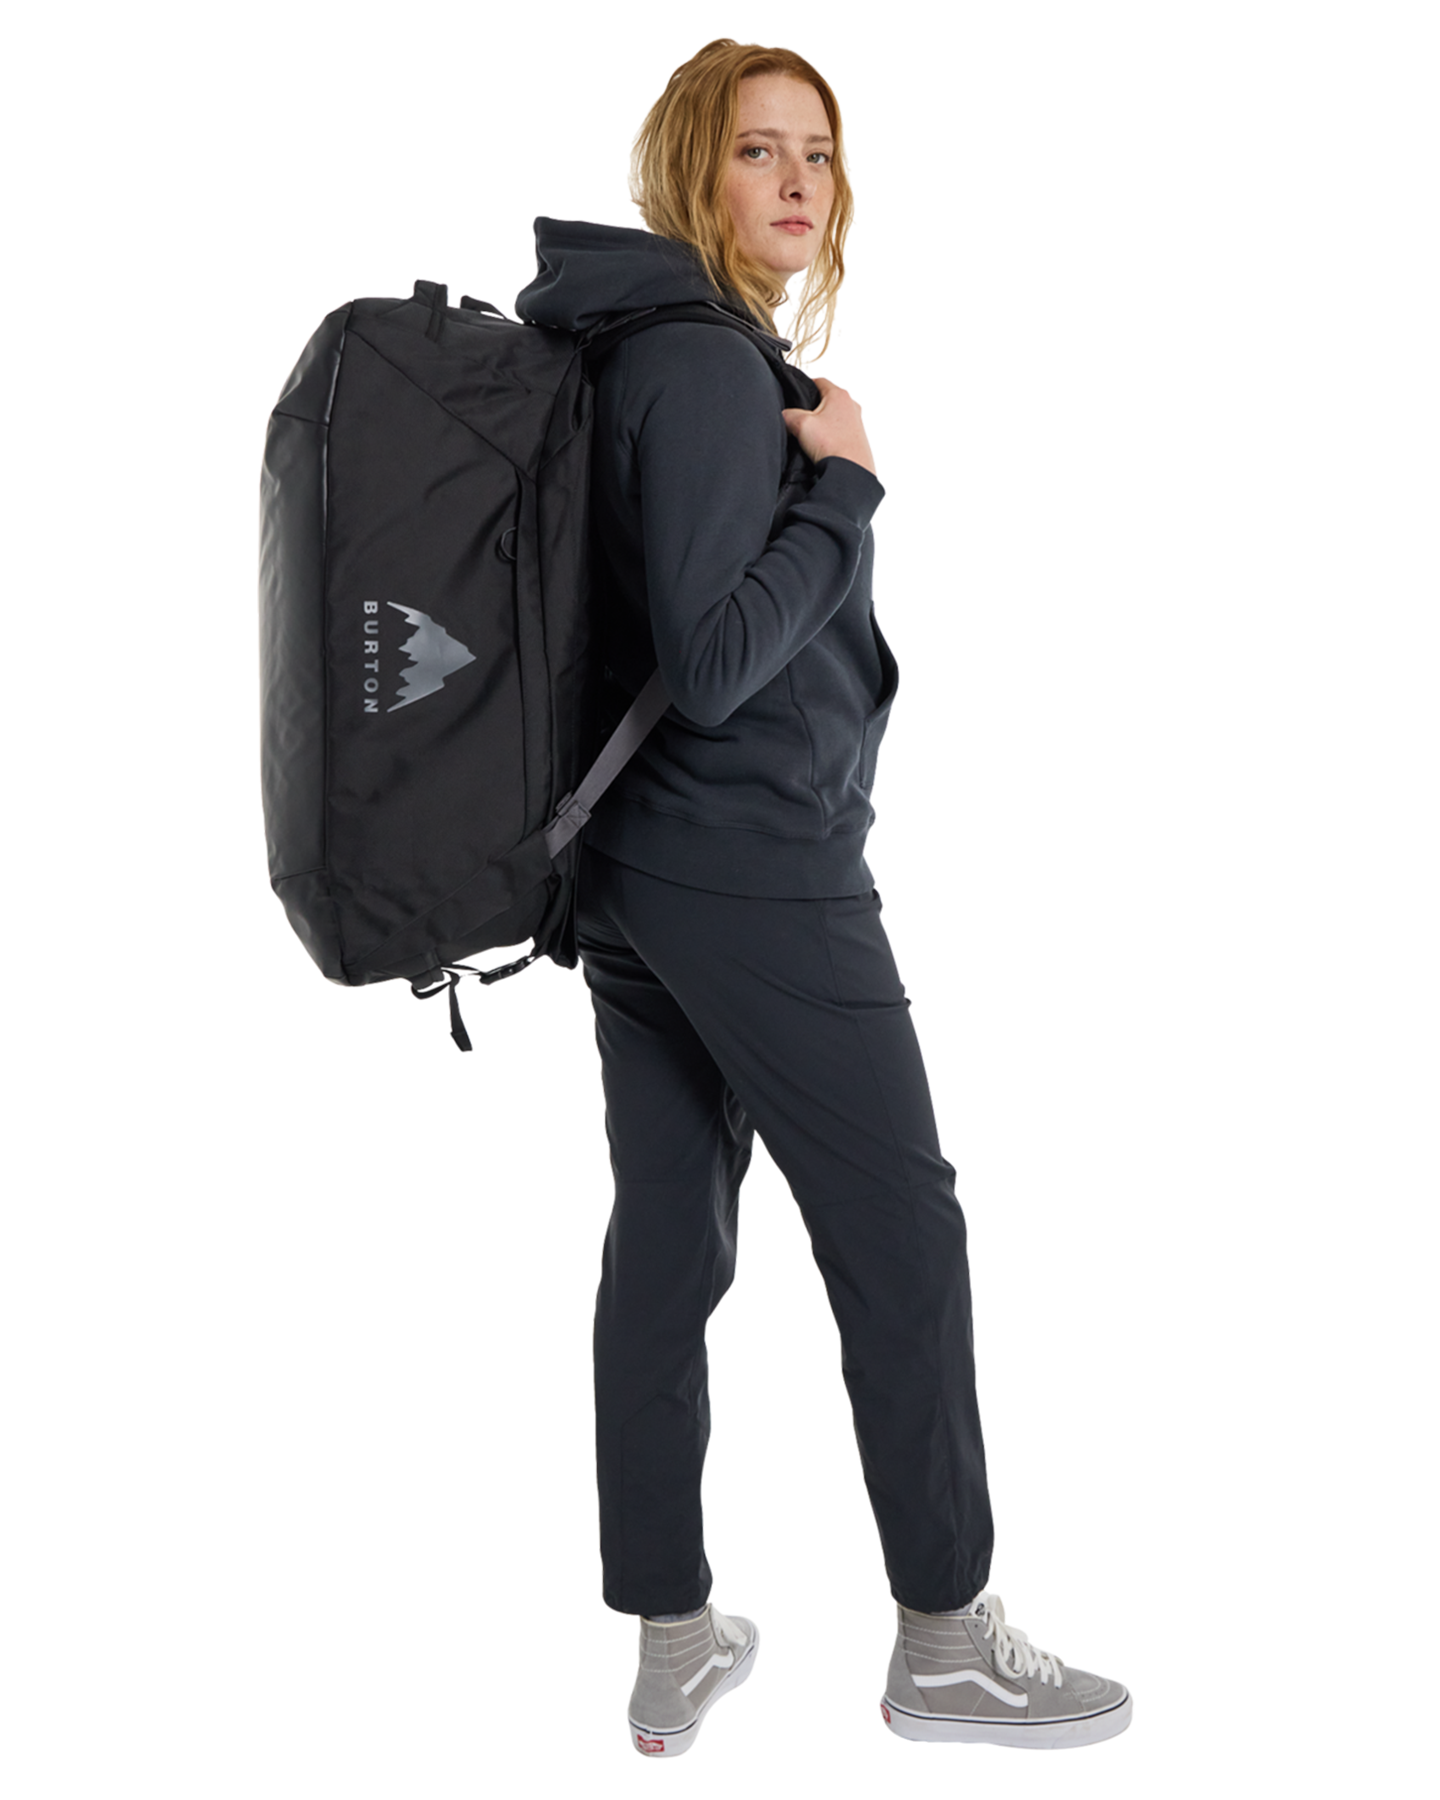 Burton Multipath 60L Expandable Duffel Bag - True Black Ballistic Luggage Bags - SnowSkiersWarehouse